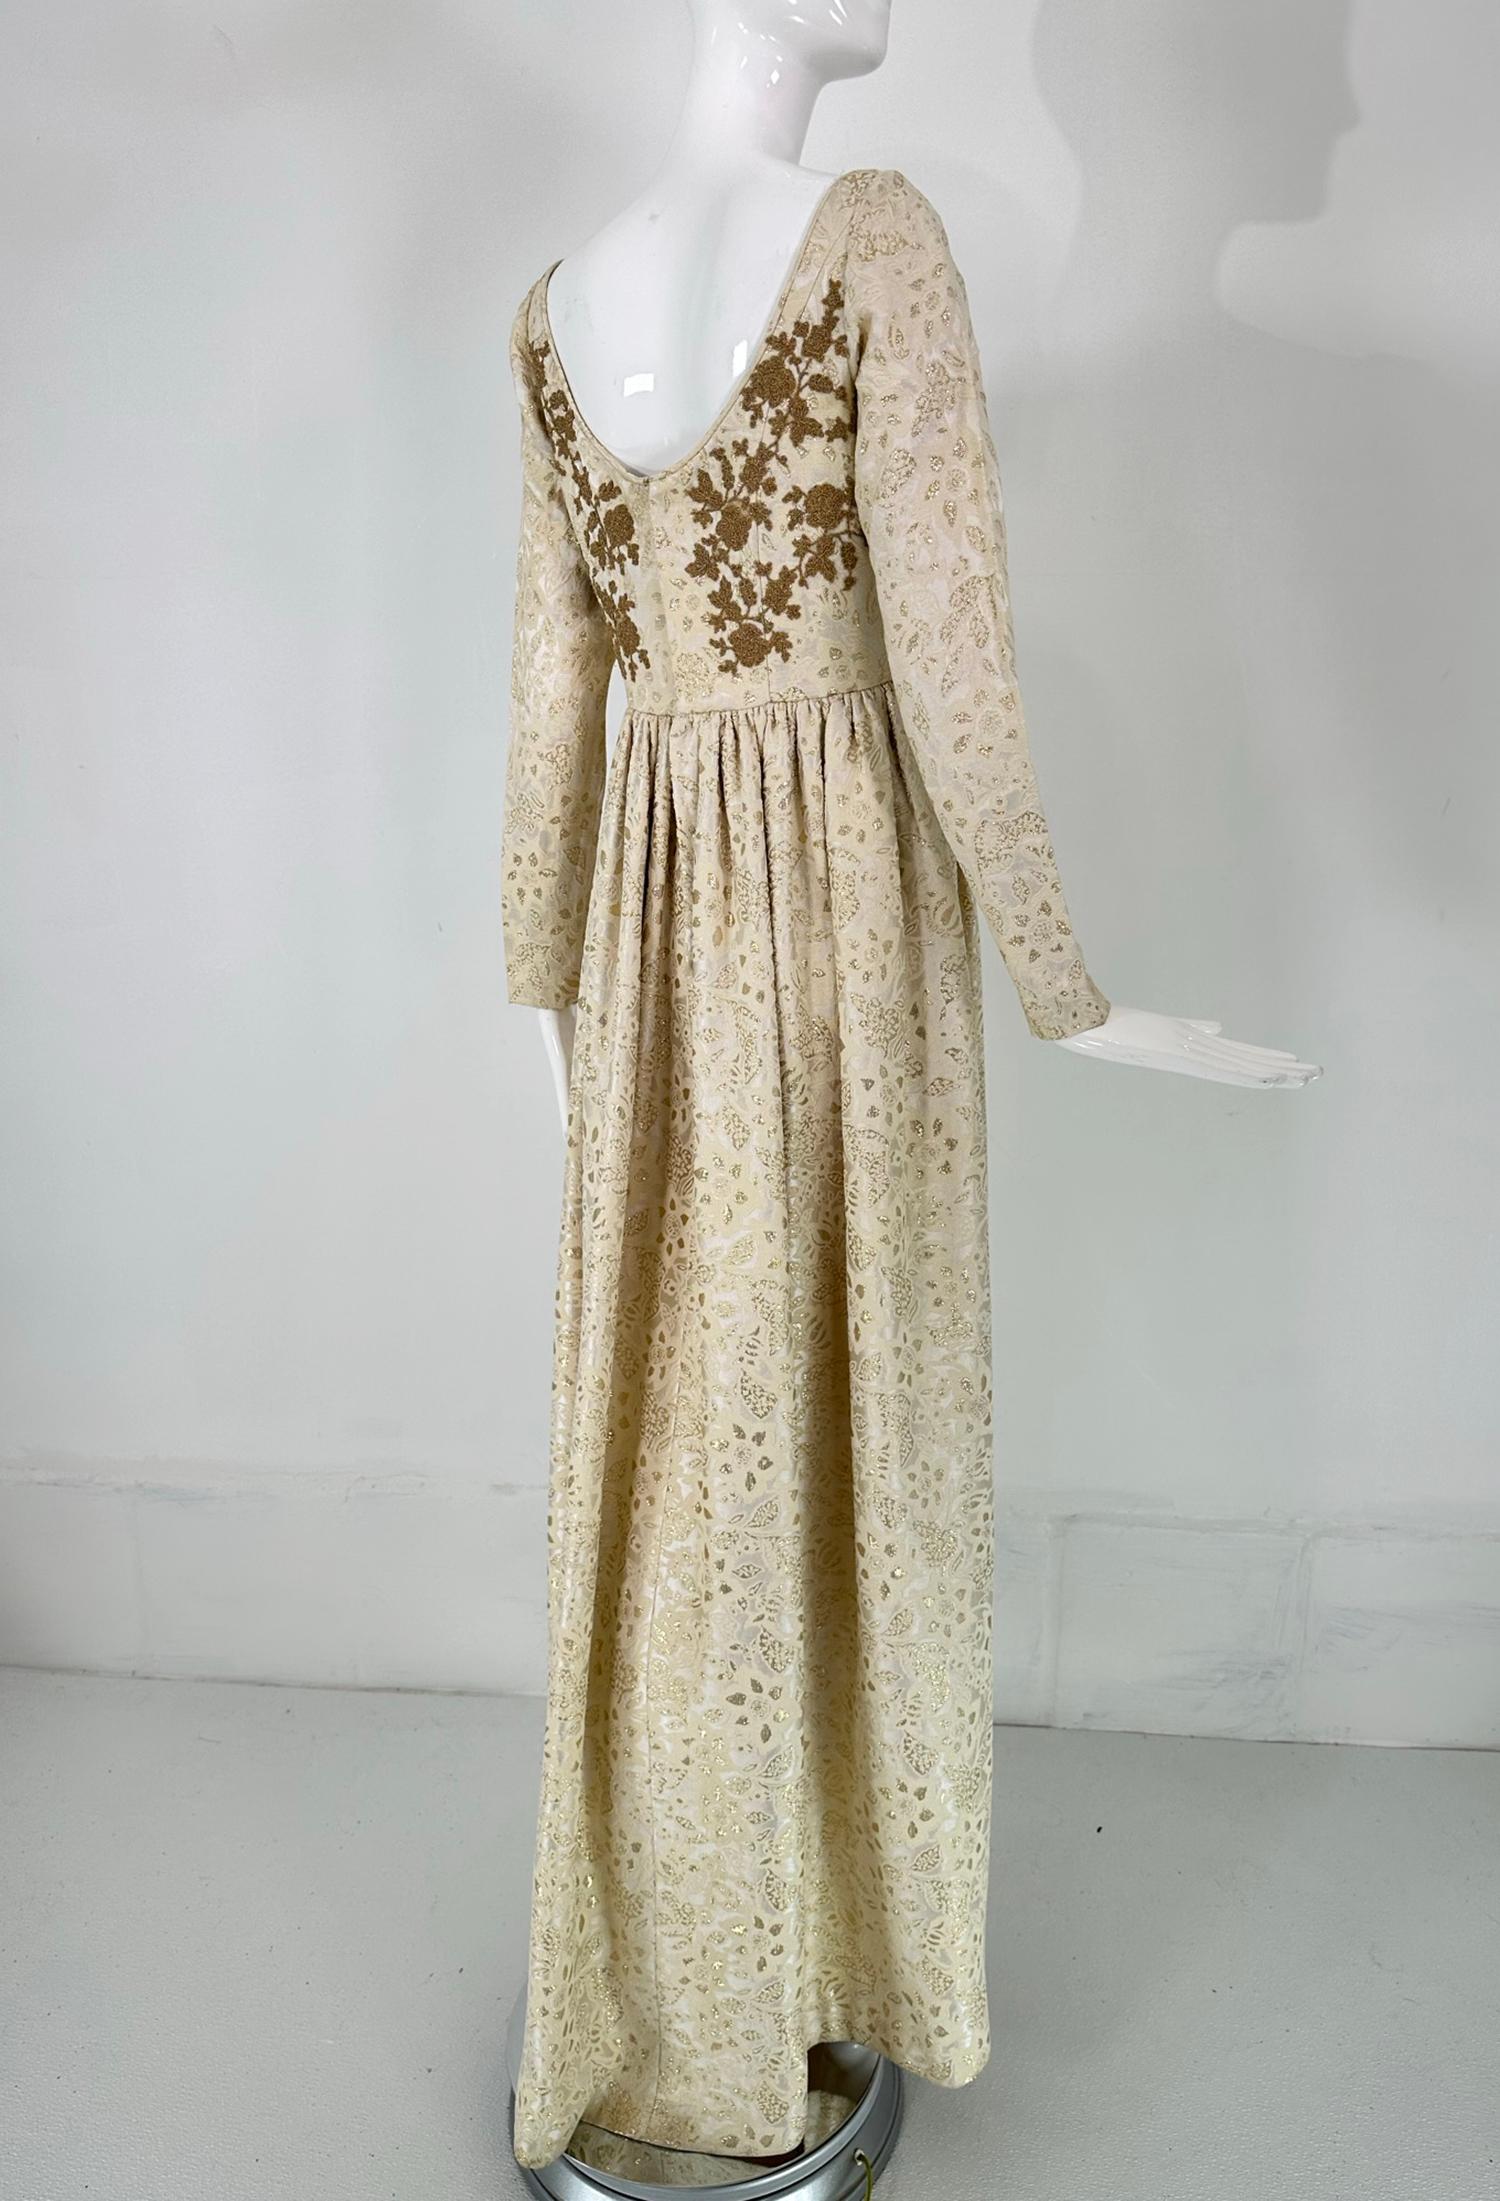 Galitizne Couture Renaissance Style Gown in Cream & Gold Metallic Brocade 1970s For Sale 2